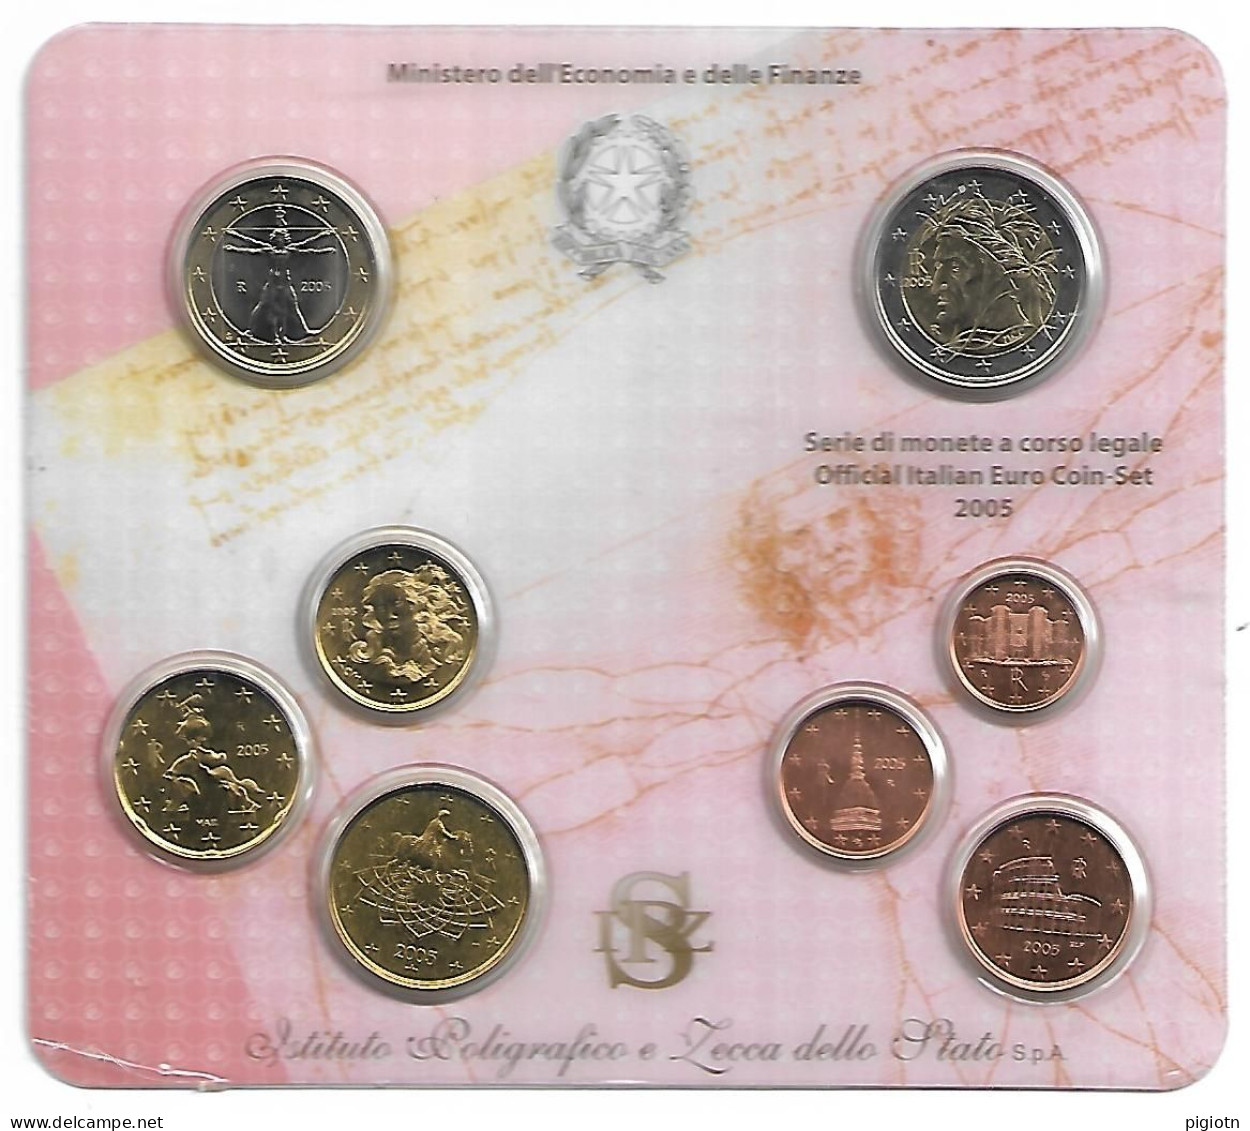 EURO 2005 - SERIE DI MONETE A CORSO LEGALE 2005 OFFICIAL ITALIAN COIN-SET - Mint Sets & Proof Sets